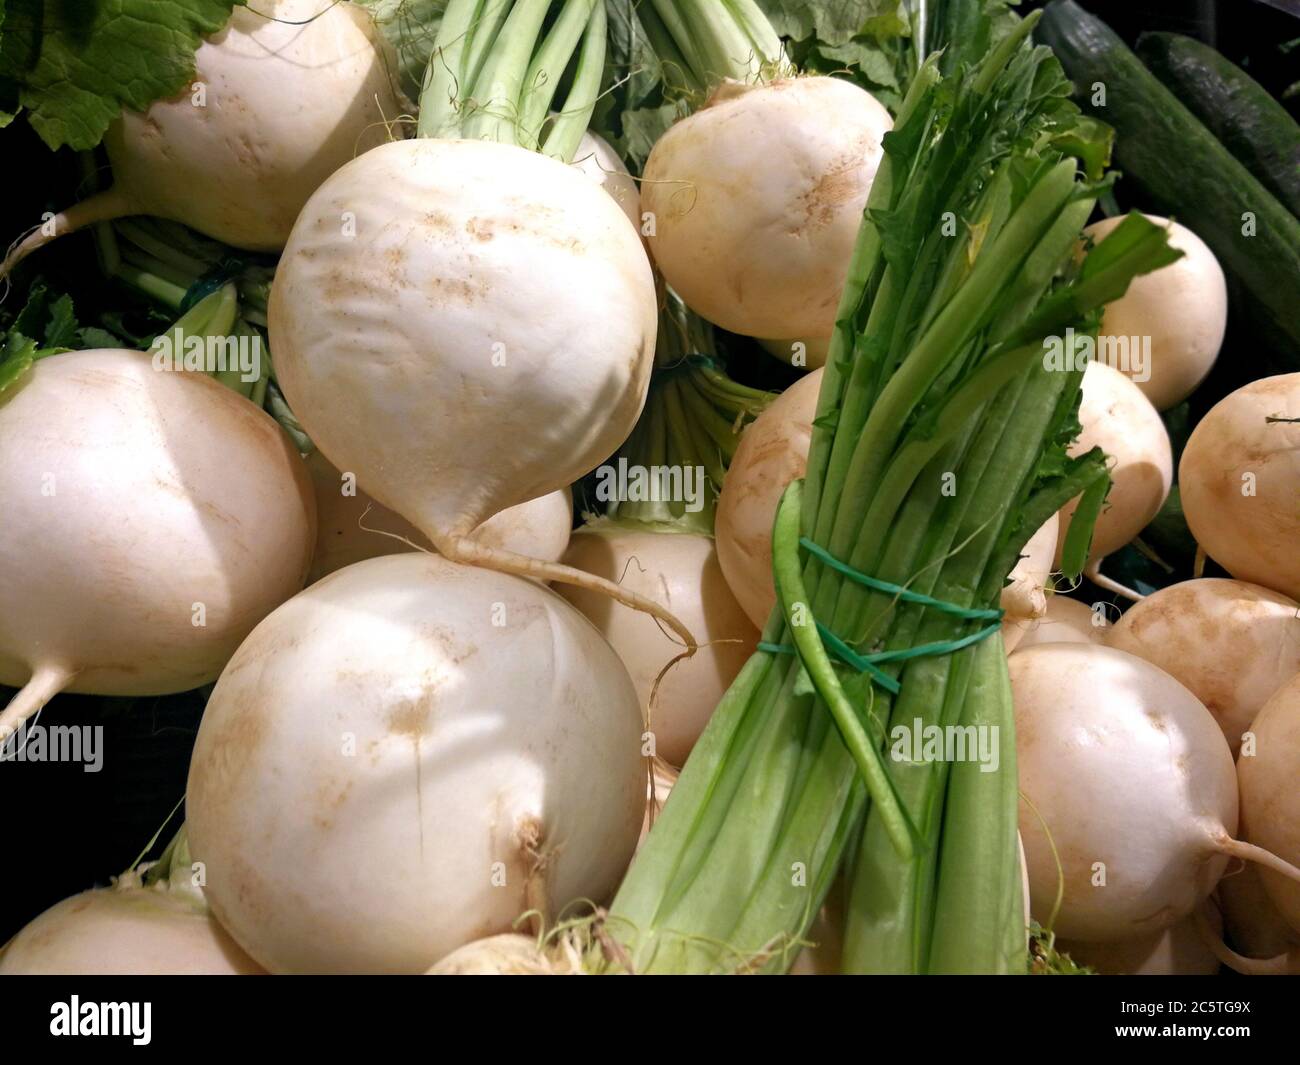 Vegetable - white radish bundled for sale Stock Photo